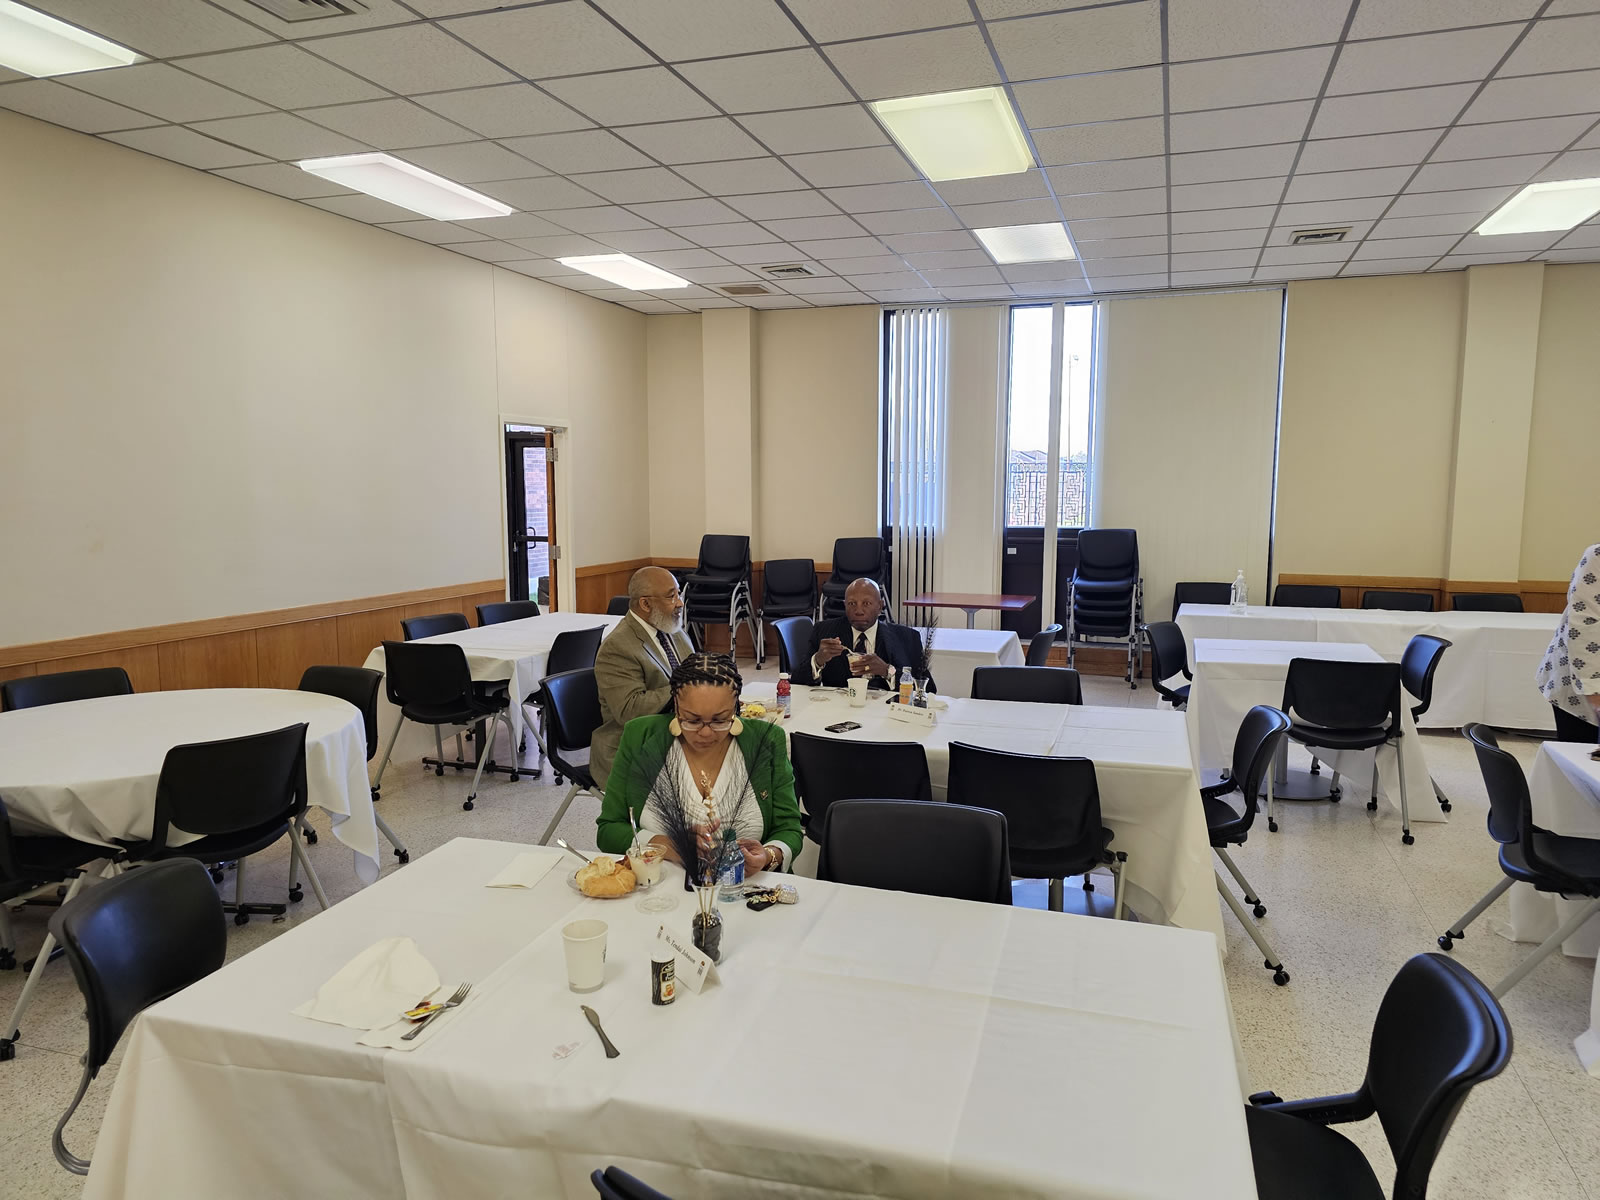 Title III Programs Mid-Year External Evaluation Meet & Greet Breakfast - Photo 5